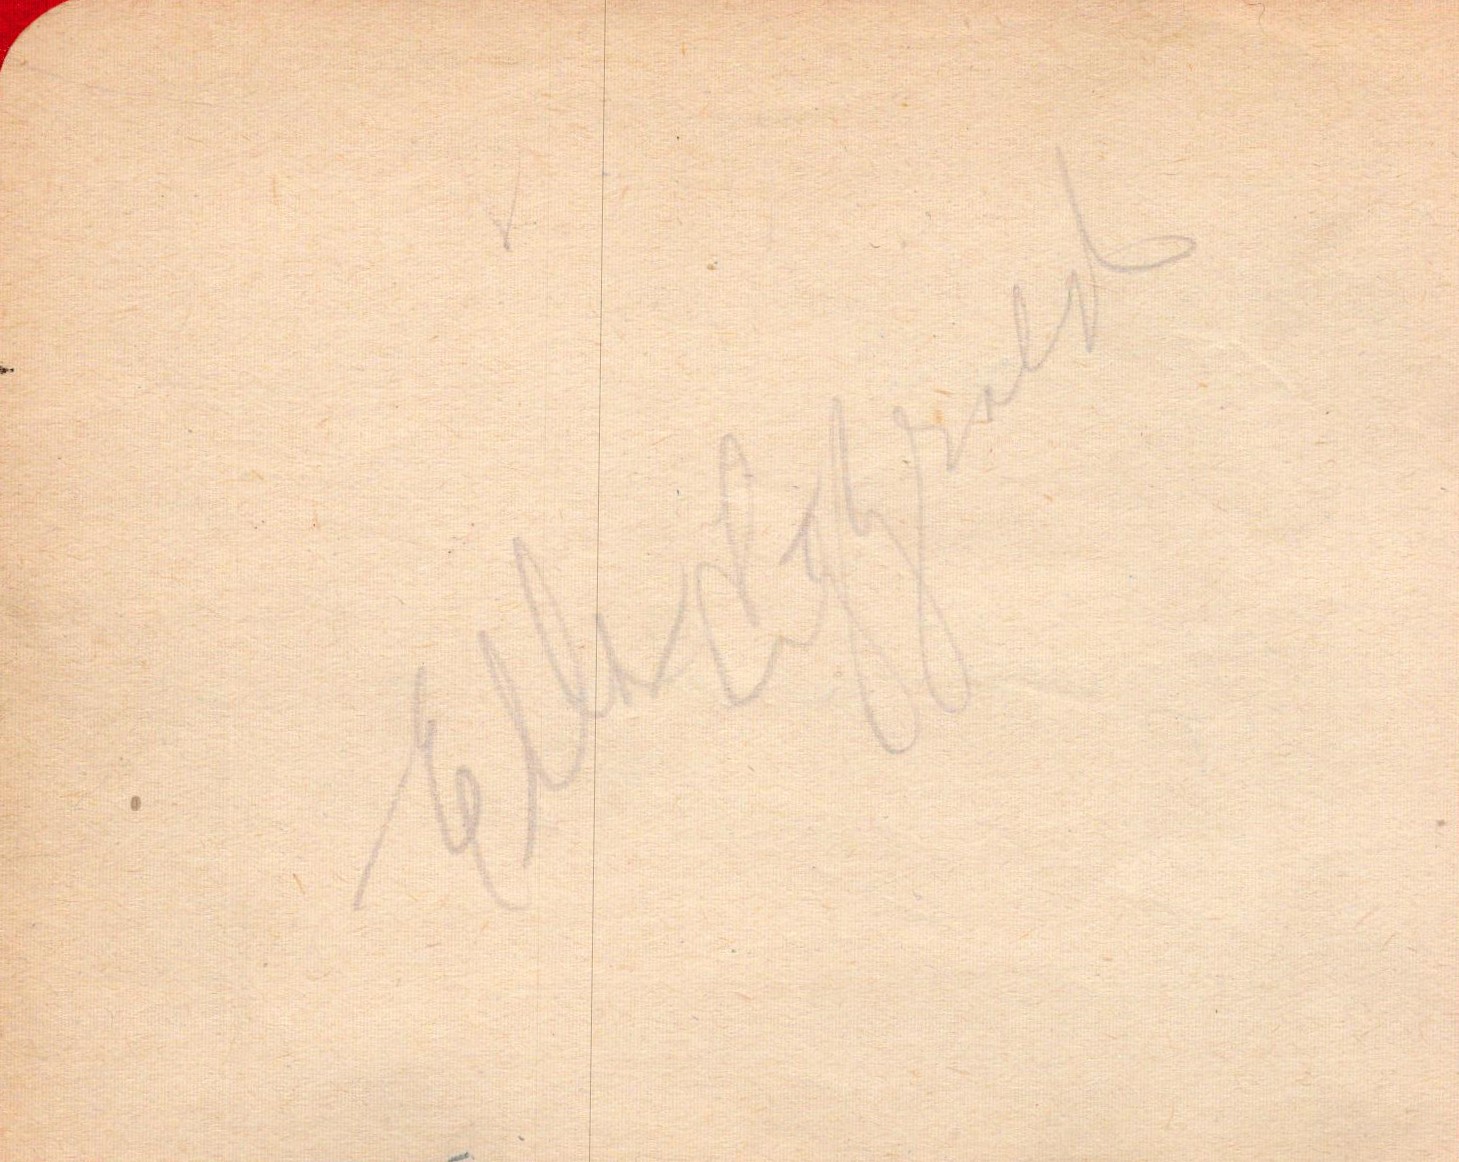 Ella Fitzgerald signed 5x4 album page. Ella Jane Fitzgerald (April 25, 1917 - June 15, 1996) was